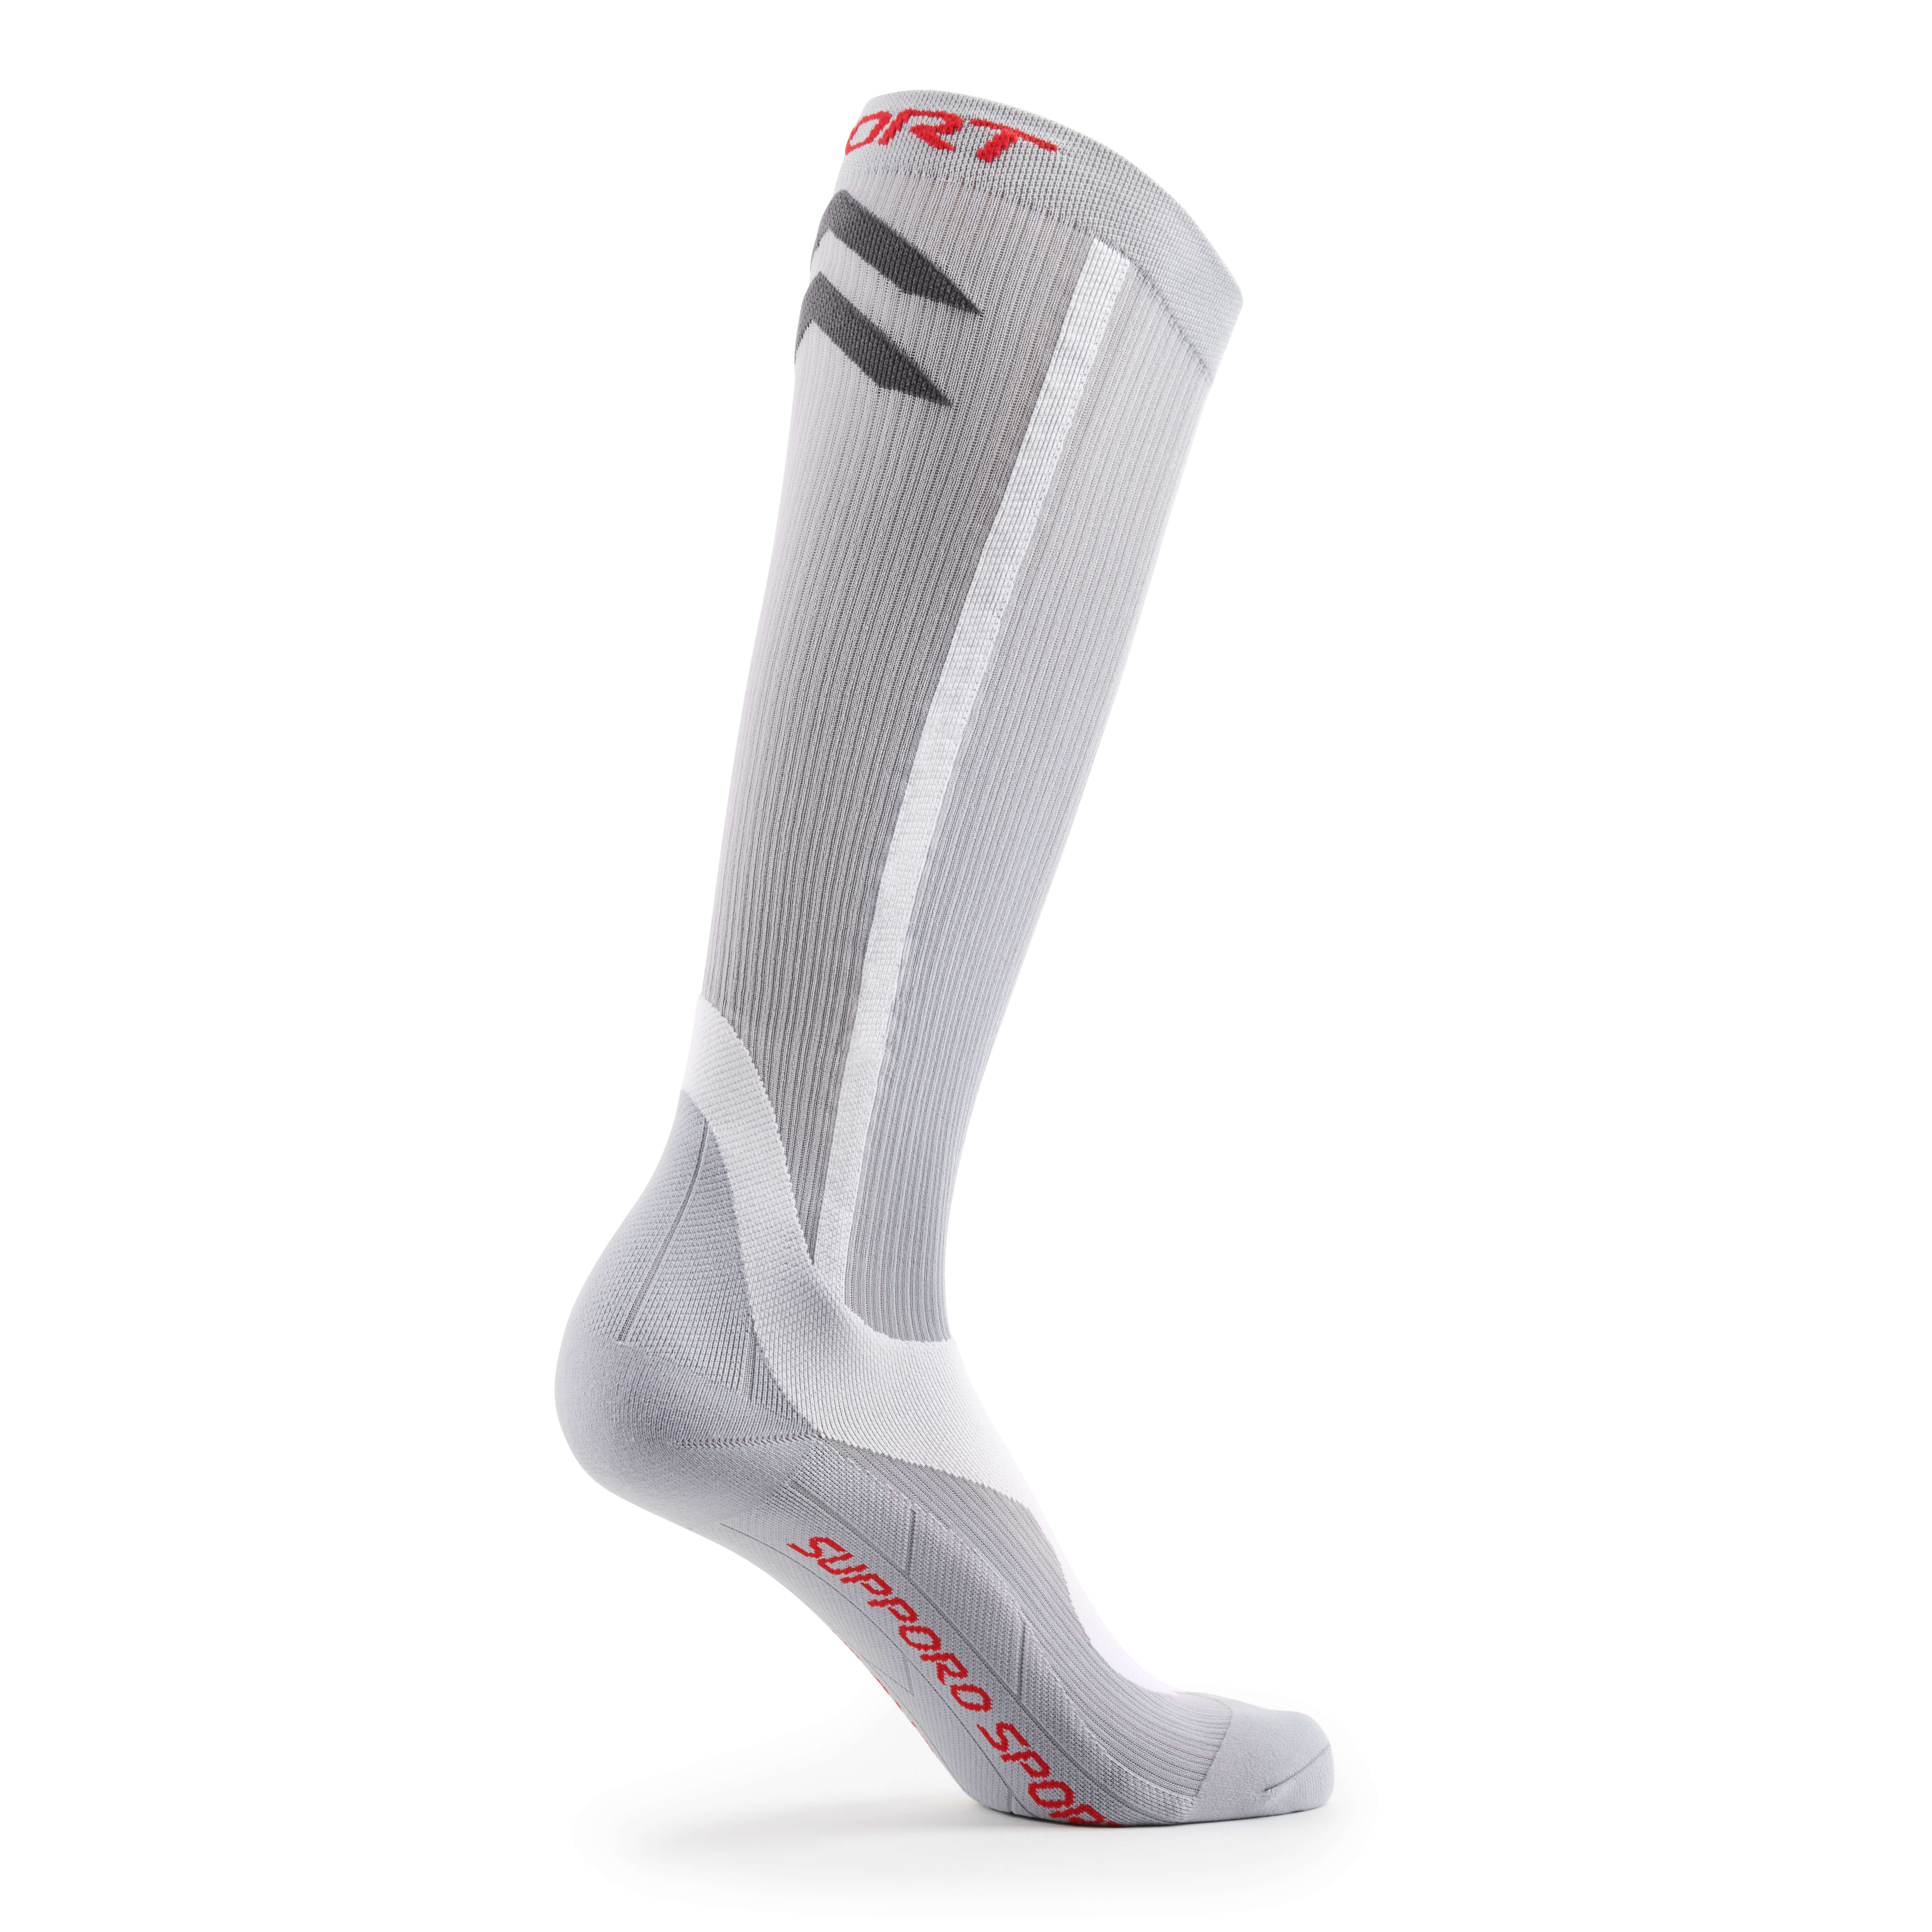 Unisex compression socks